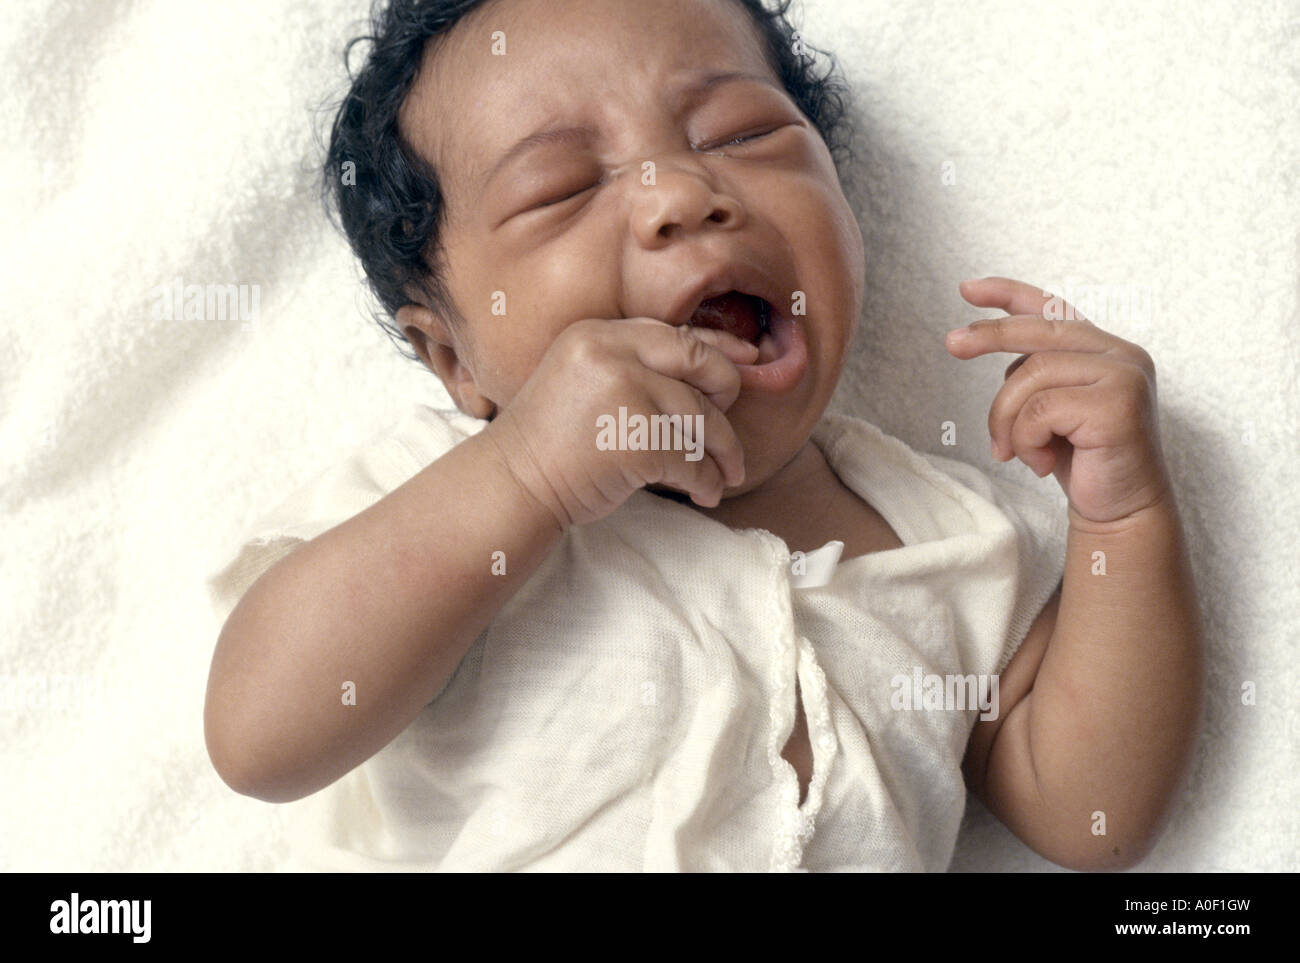 black baby crying Stock Photo